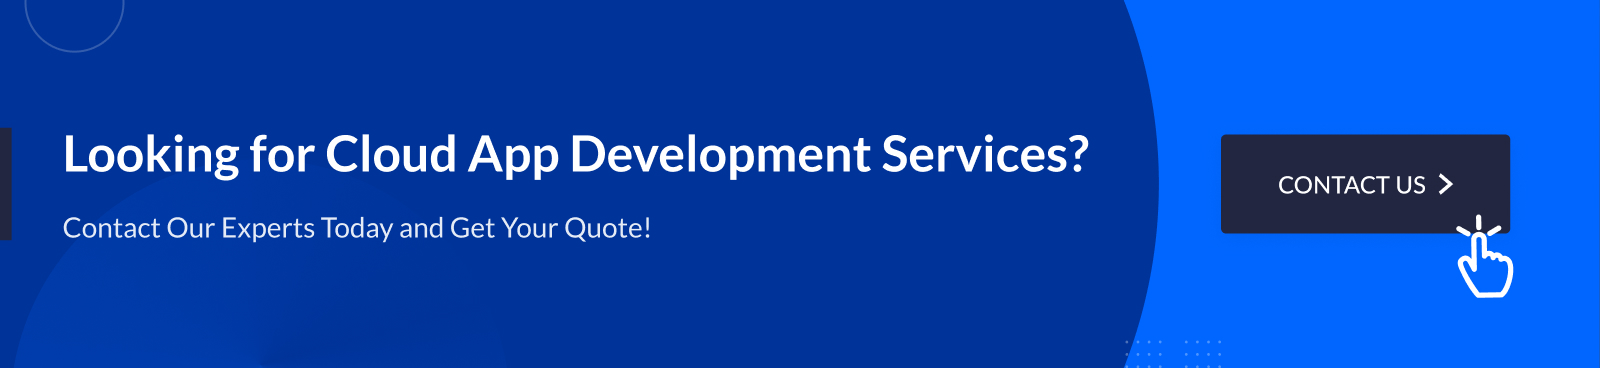 Looking for Cloud App Development Services